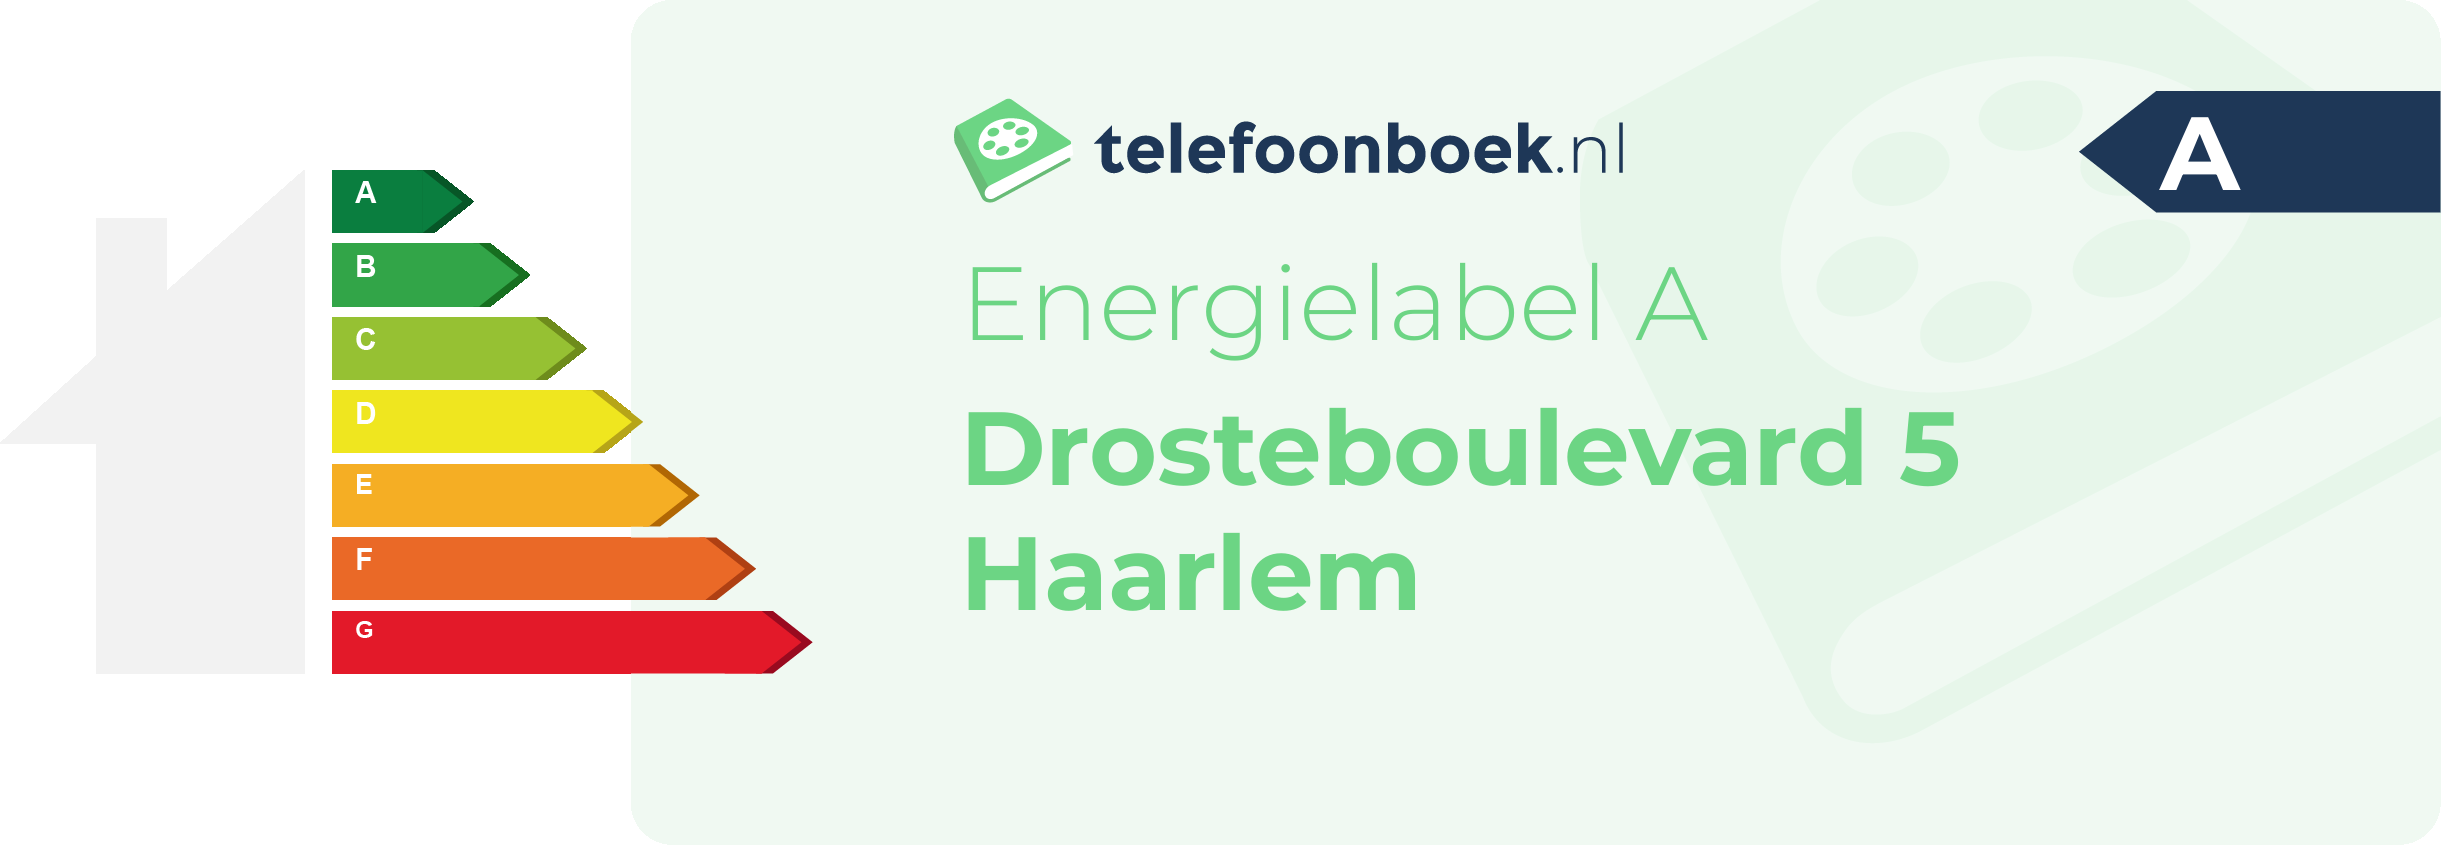 Energielabel Drosteboulevard 5 Haarlem